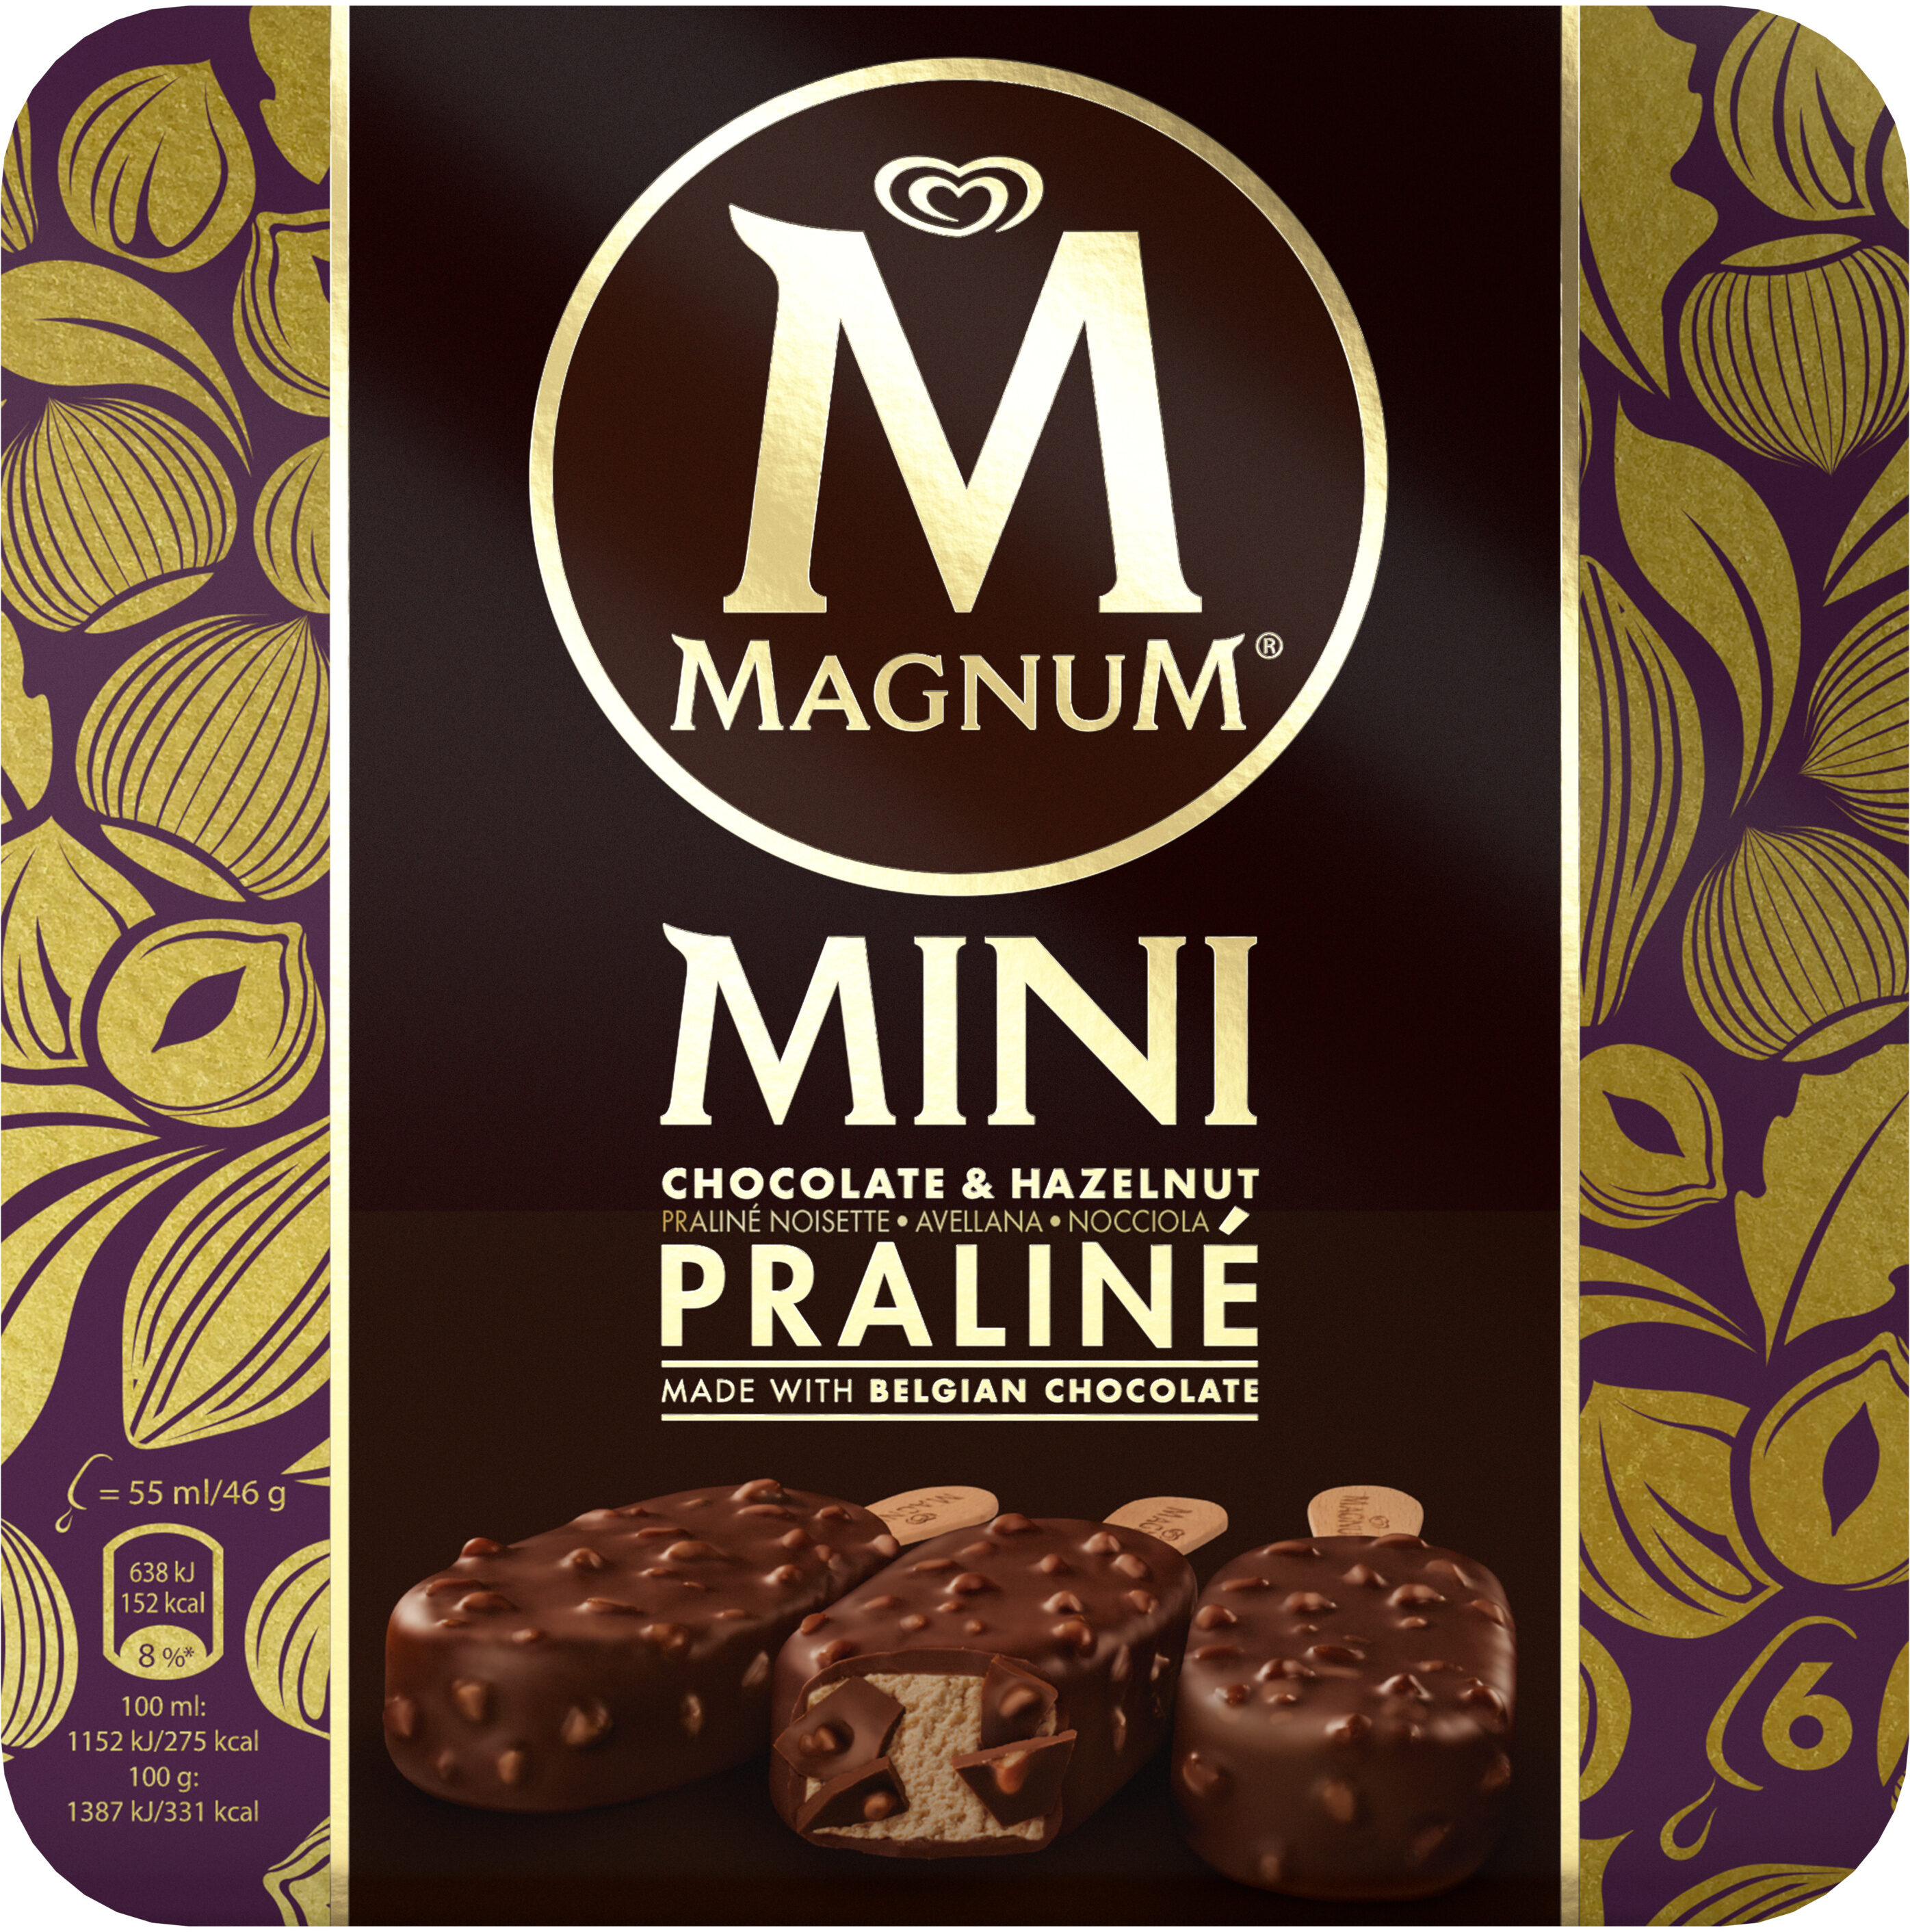 Mini Chocolate & Hazelnut Praliné - Product